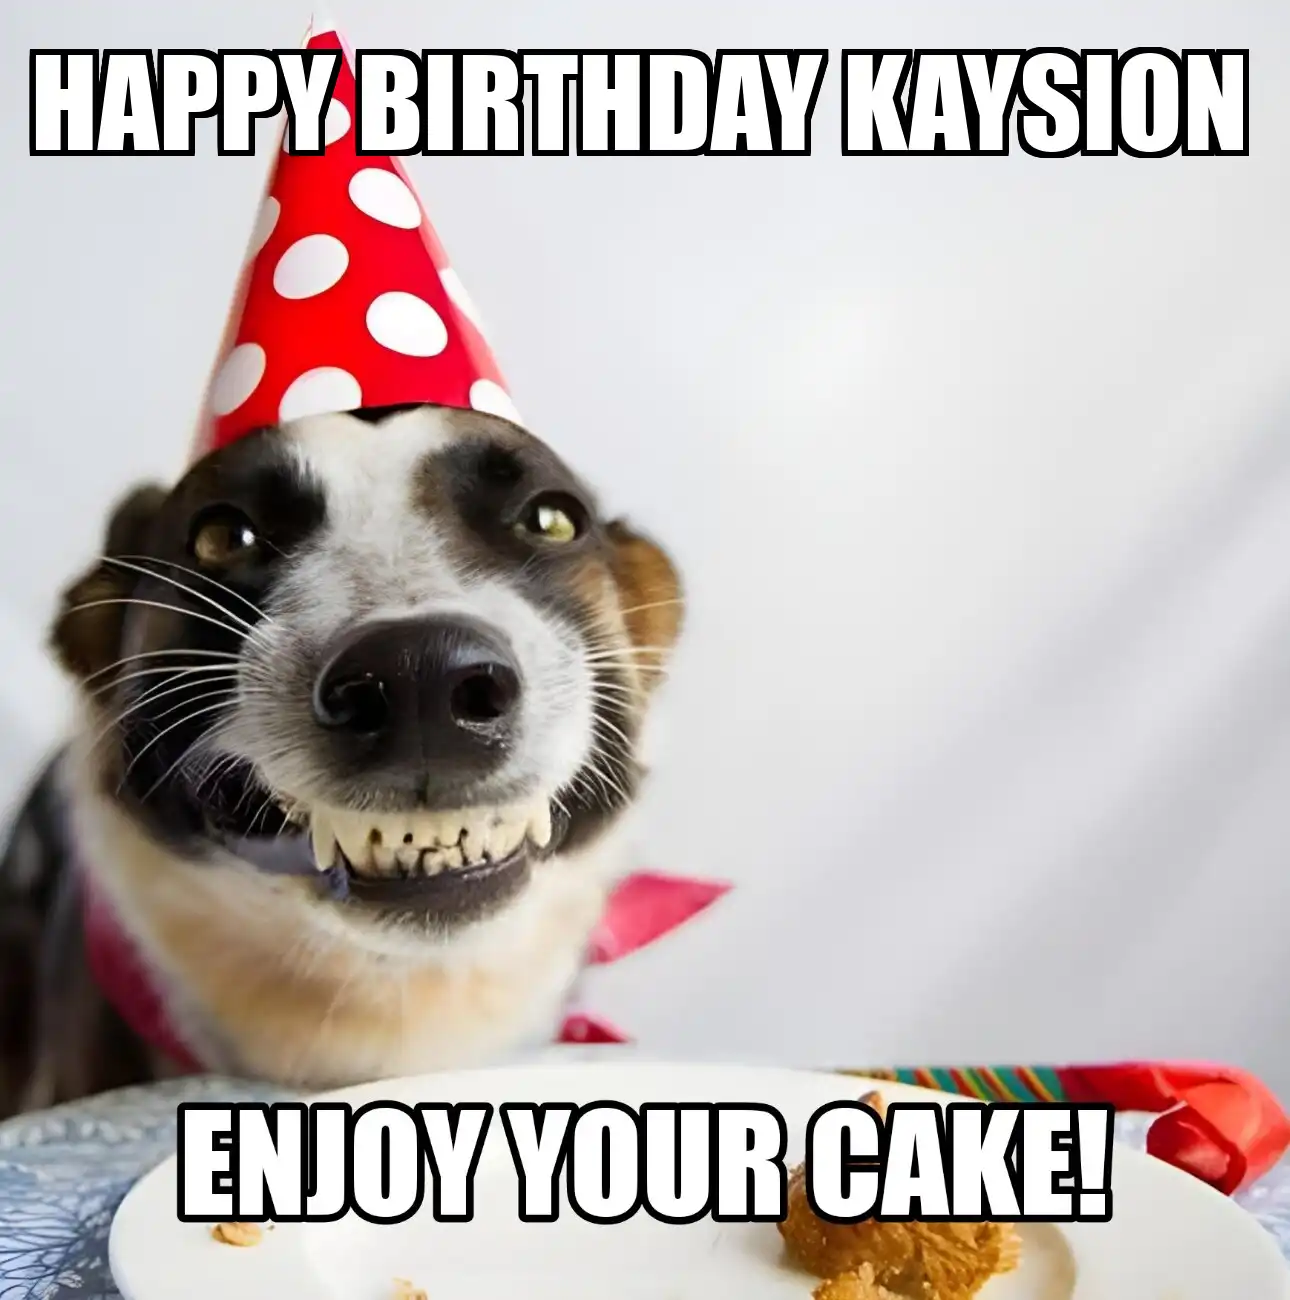 Happy Birthday Kaysion Enjoy Your Cake Dog Meme